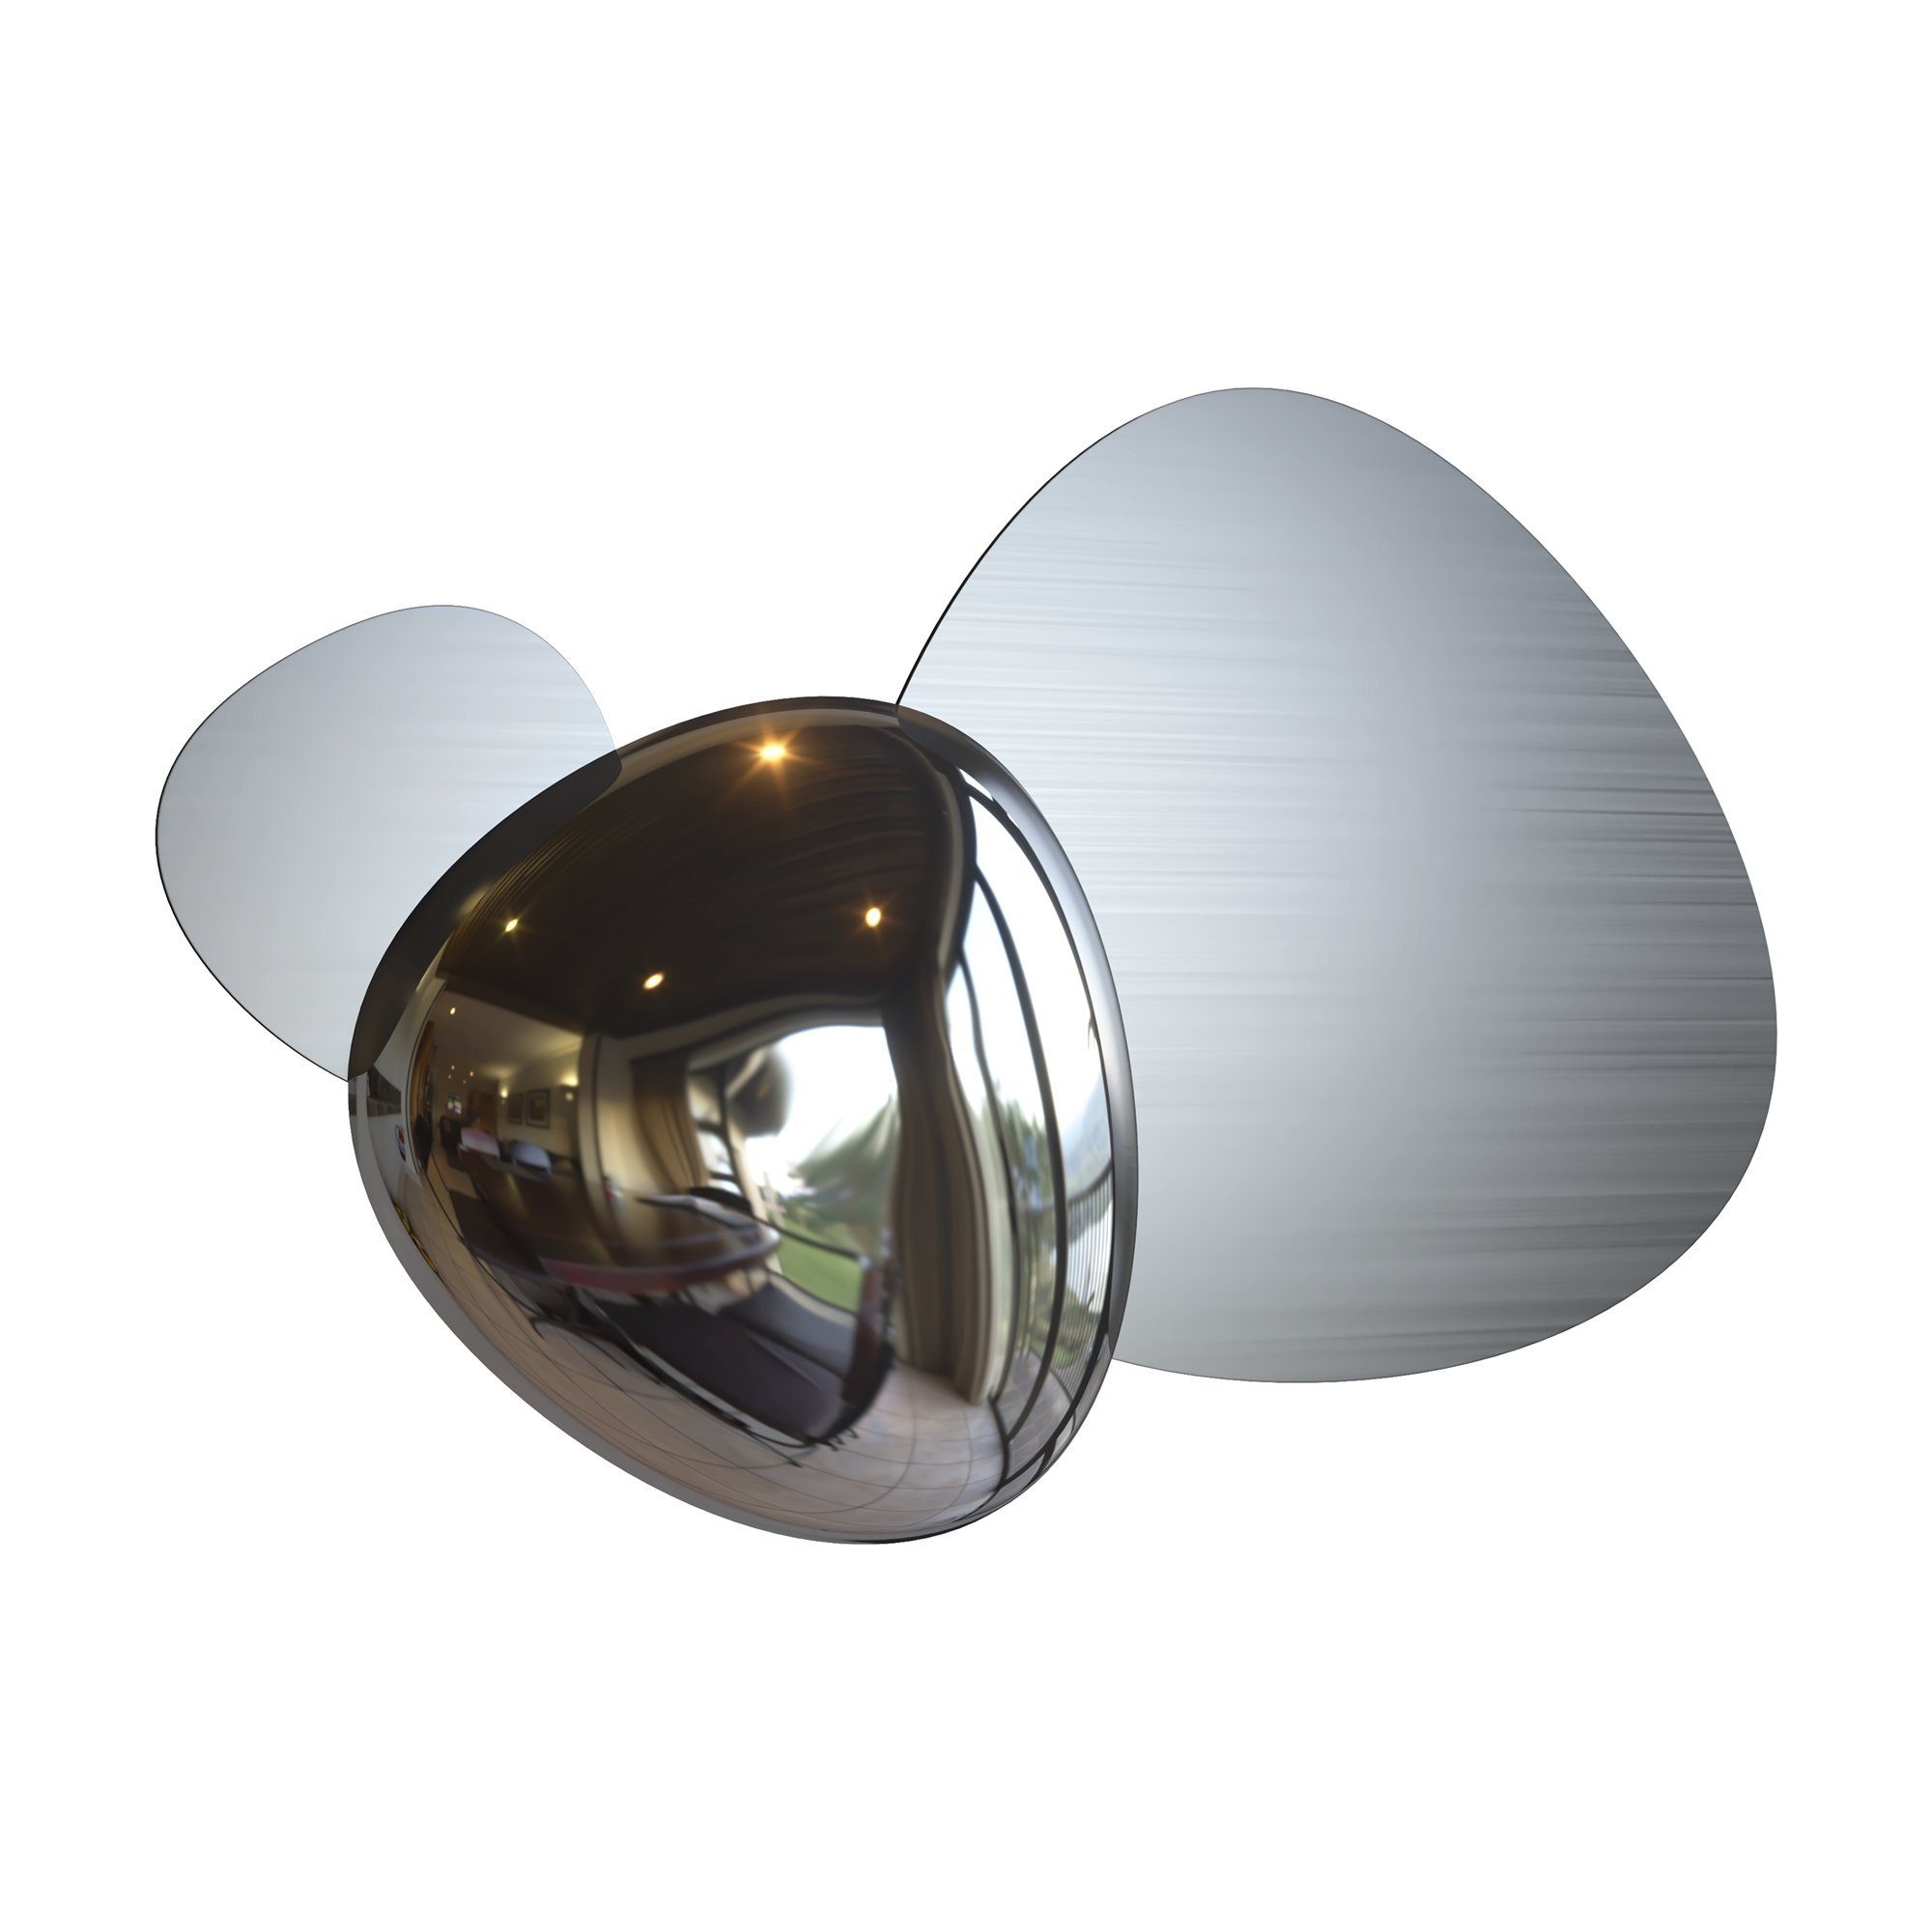 MAYTONI DECORATIVE LIGHTING Wandleuchte Jack-stone 4 36.3x26.9x7.4 cm, LED fest integriert, hochwertige Design Lampe & dekoratives Raumobjekt